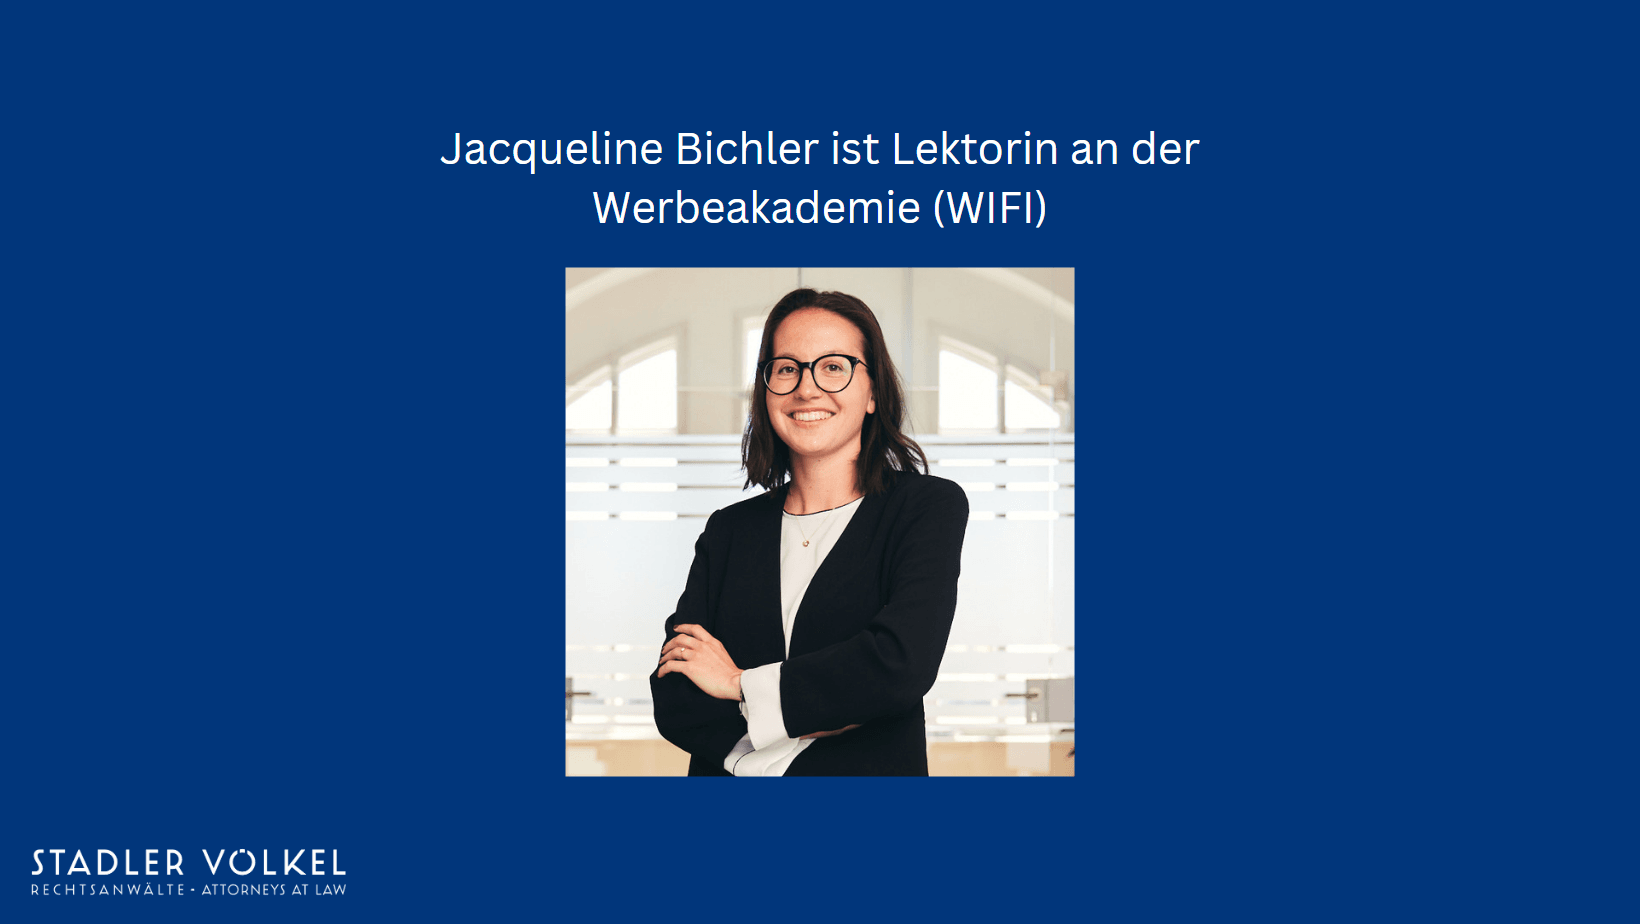 SV.LAW in cooperation with Werbeakademie (WIFI) Wien